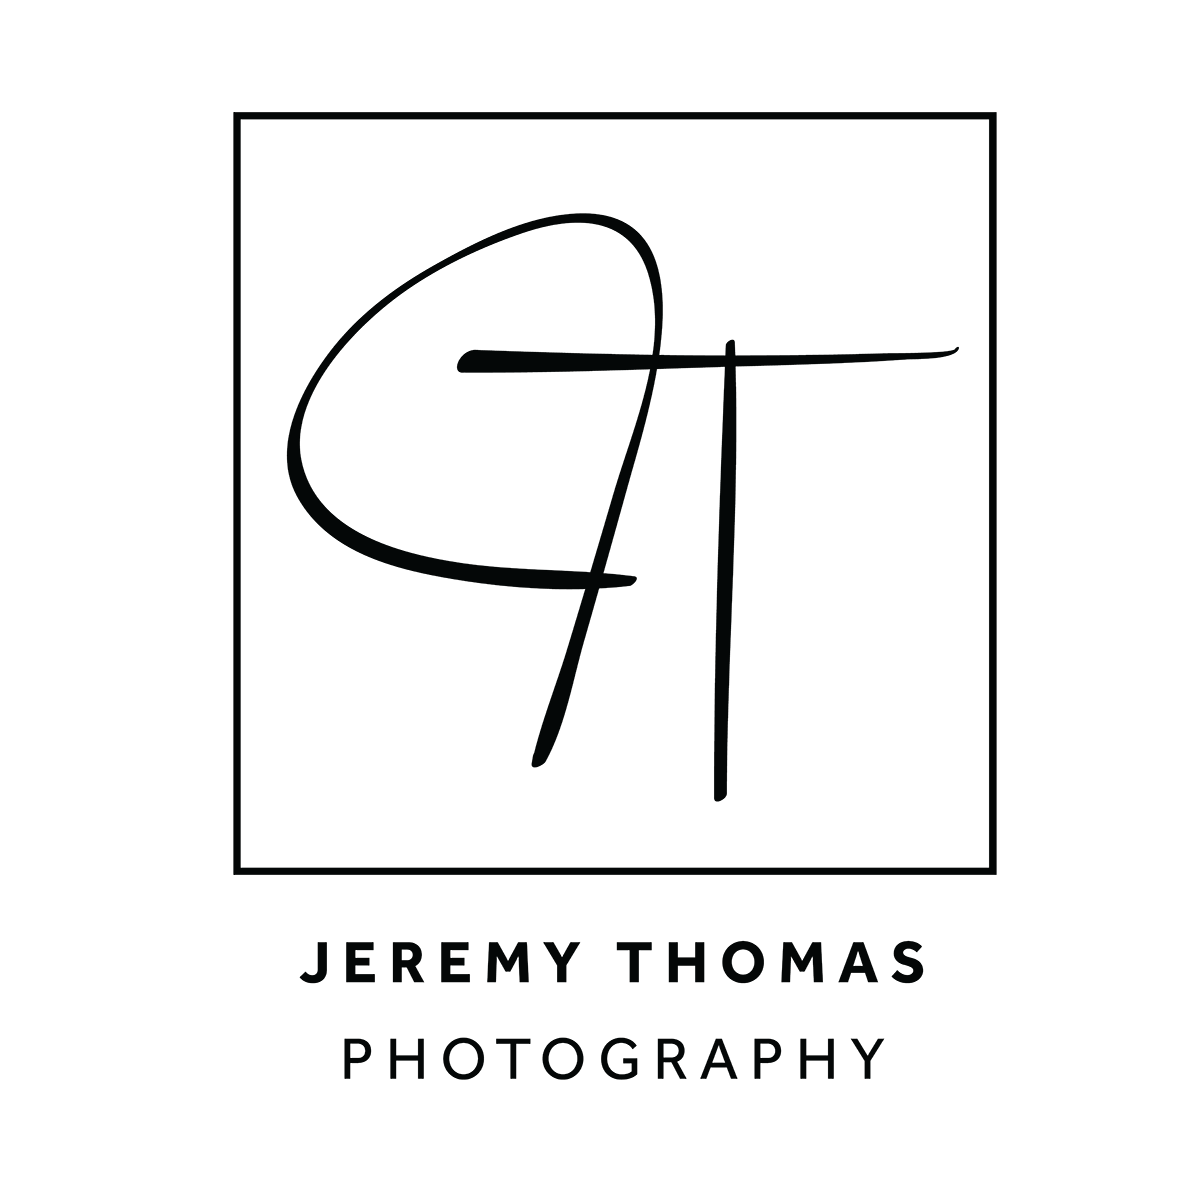 Jeremy Thomas Photography LLC